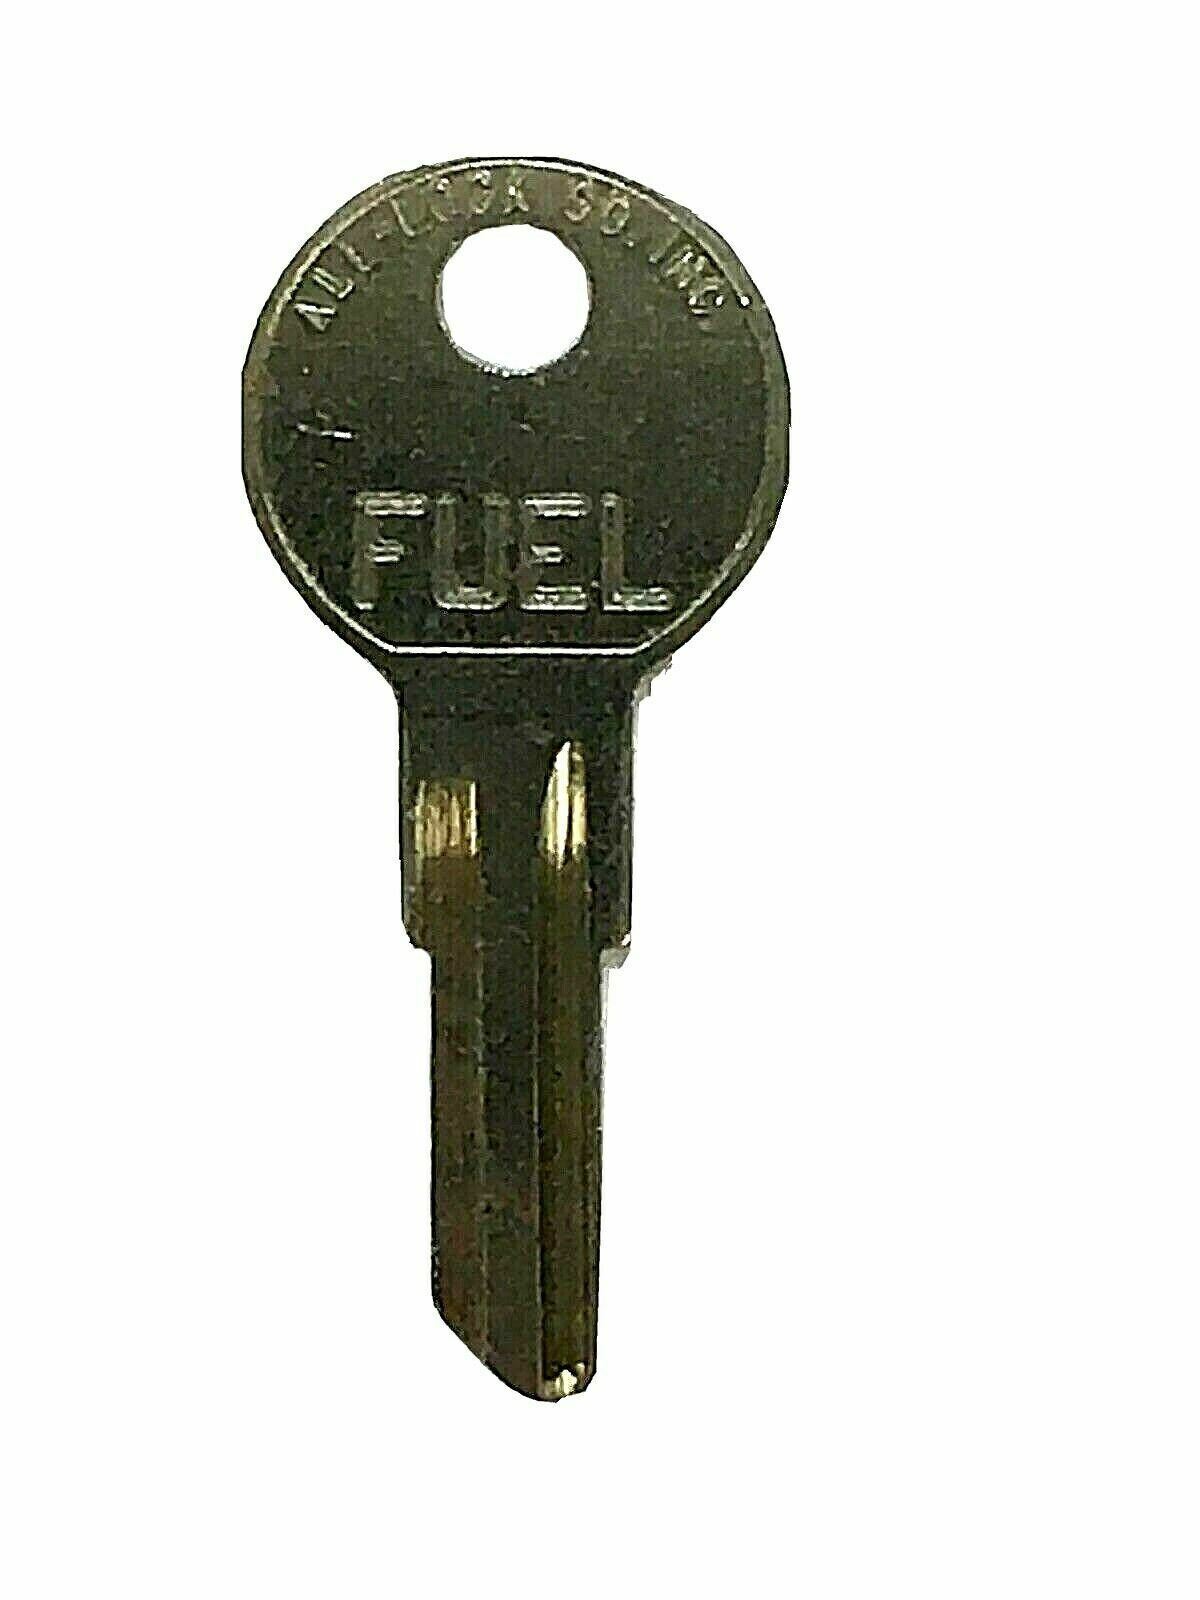 1 B1 OEM Original All-Lock Fuel Cap Automotive Key Blank